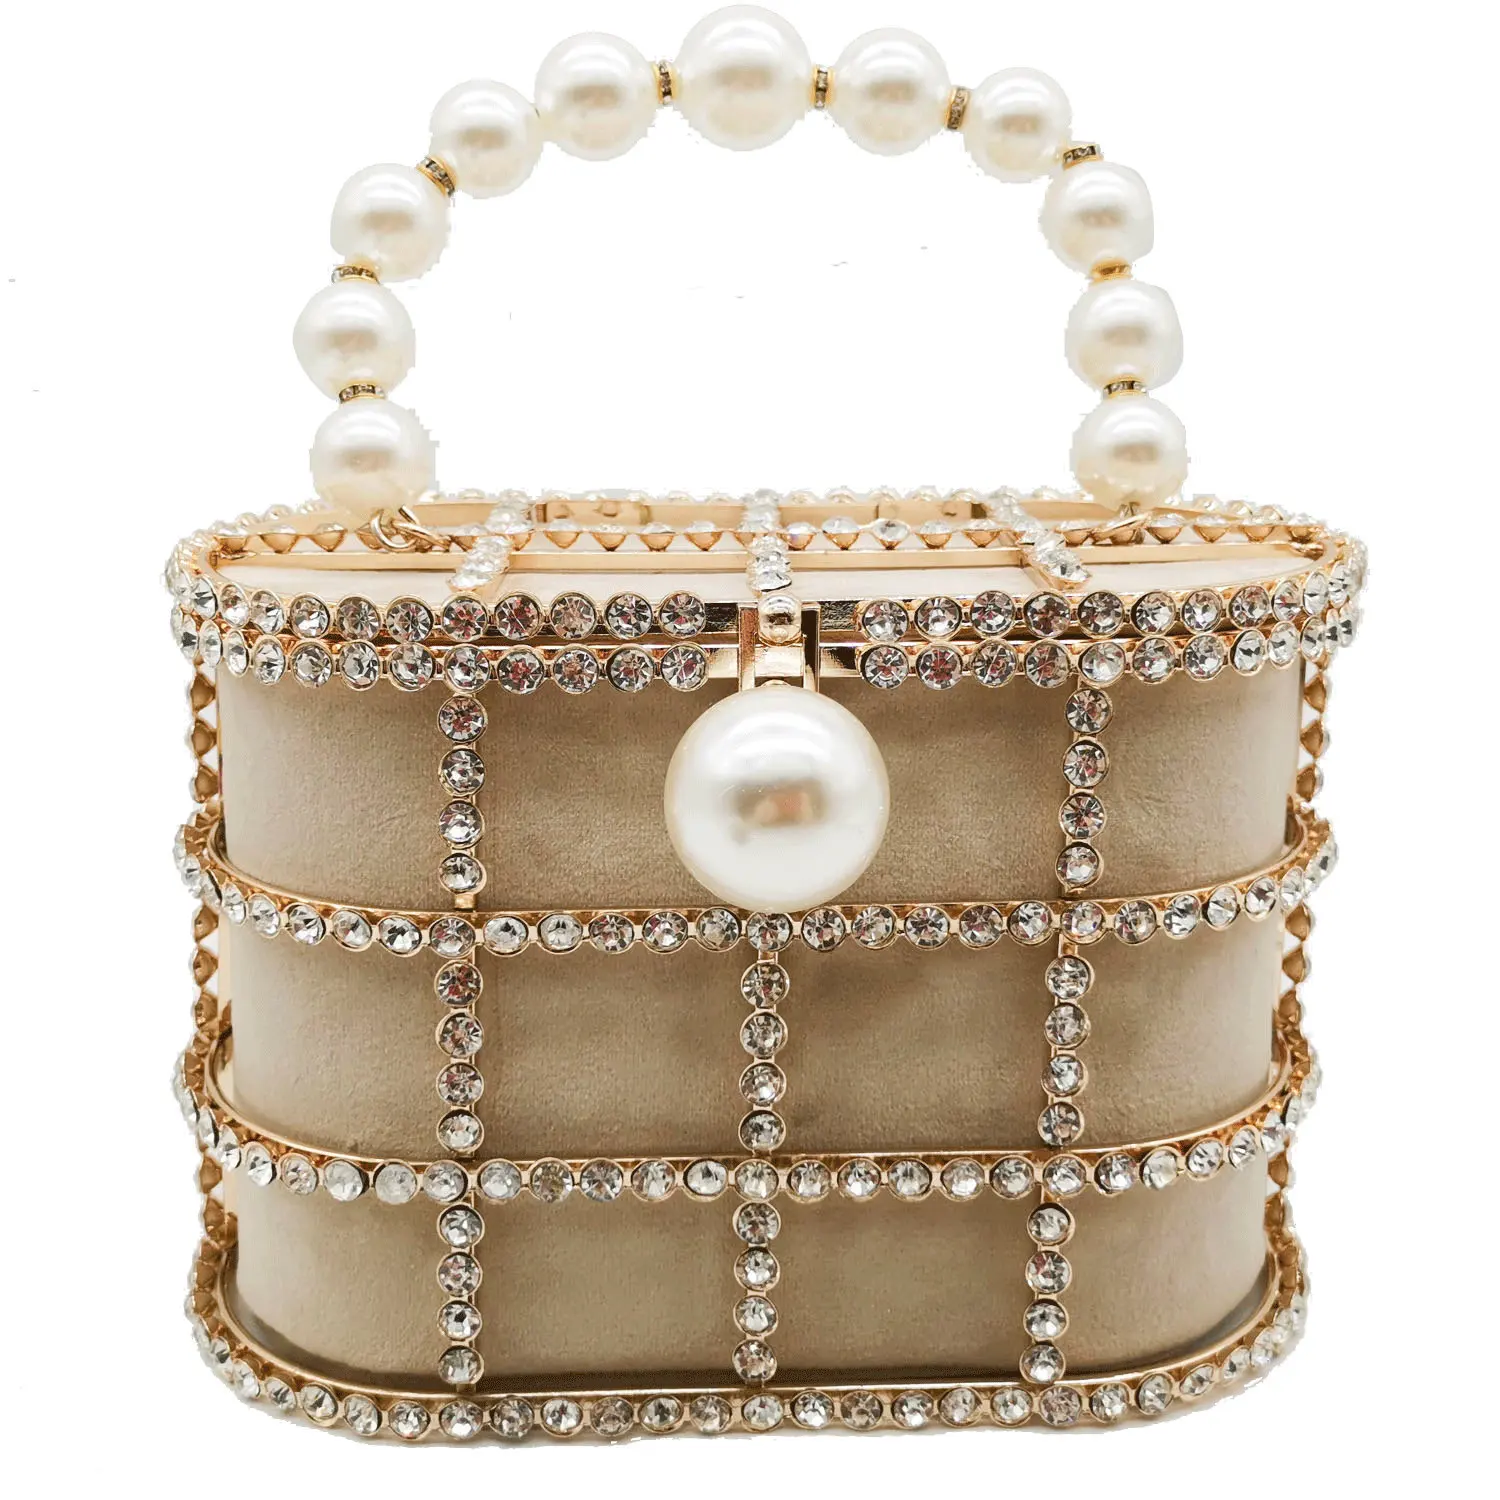 

JANHE sac a main de lux bolsas feminina RTS Totes Bags Ladies Jewelry Pearls Clutch Women Hand Bags 2021 Purses And Handbags, Black/red/apricot